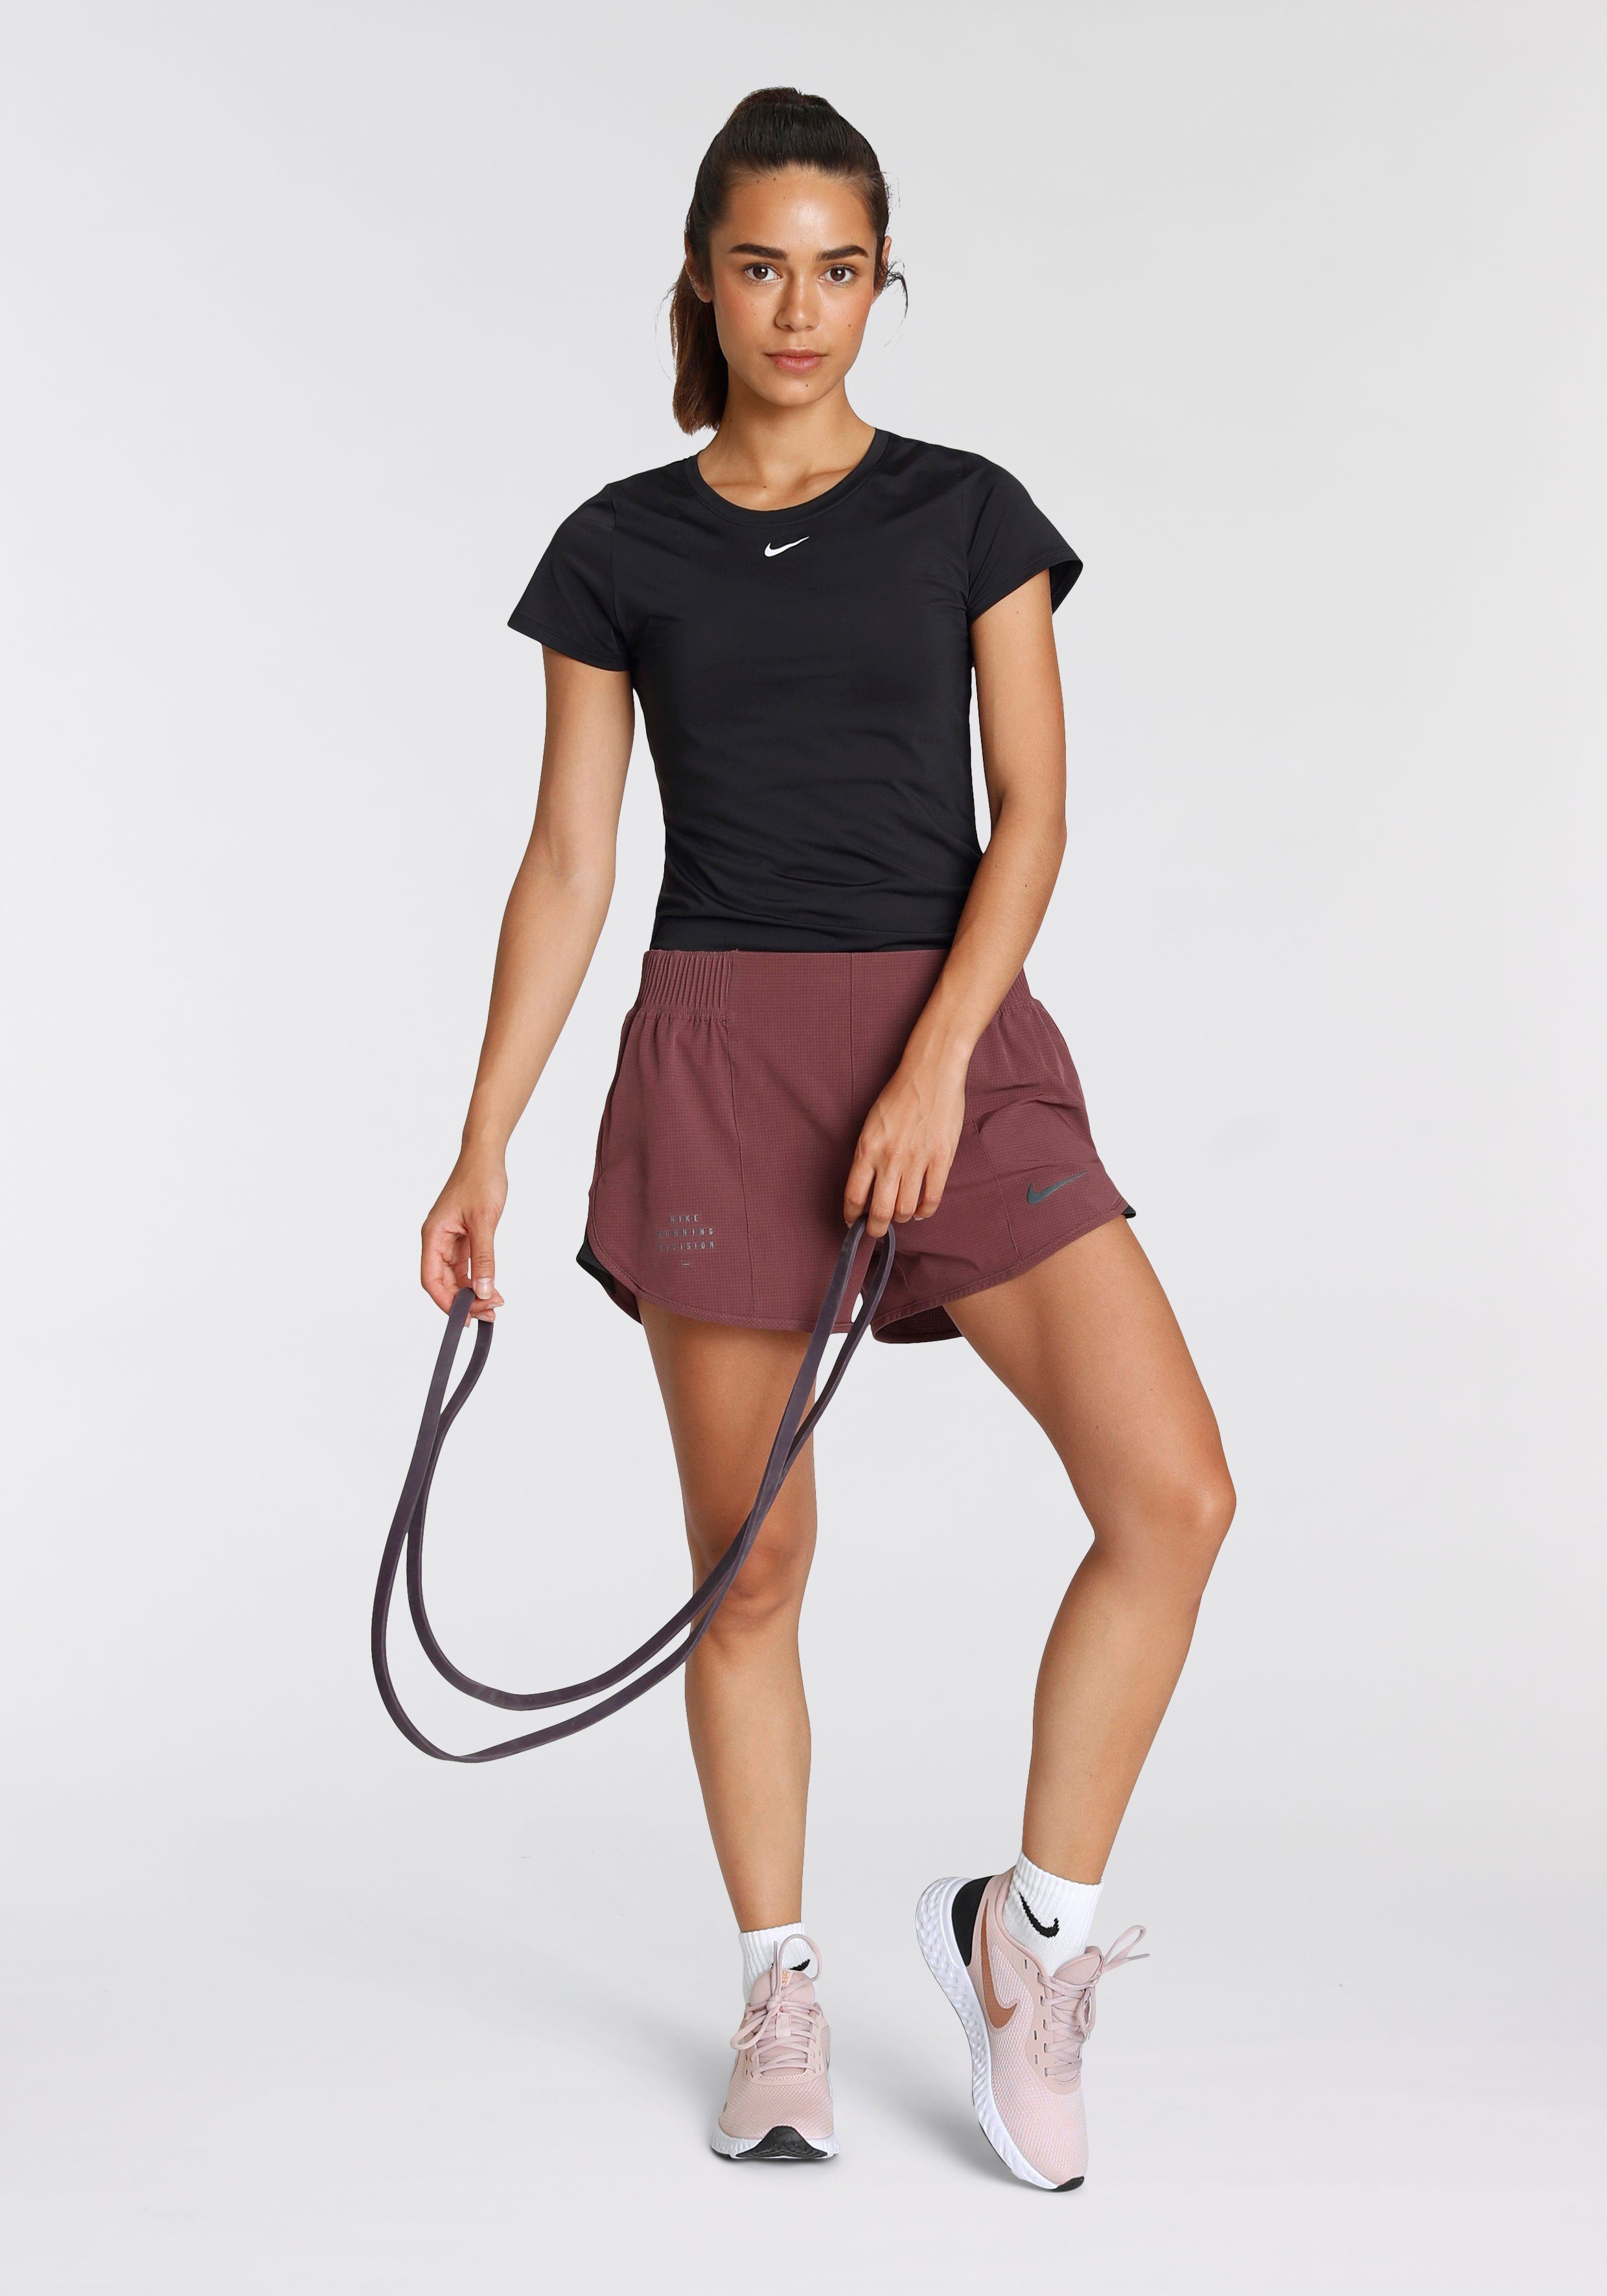 Nike Trainingsshirt DRI-FIT ONE WOMEN'S SHORT-SLEEVE schwarz TOP SLIM FIT